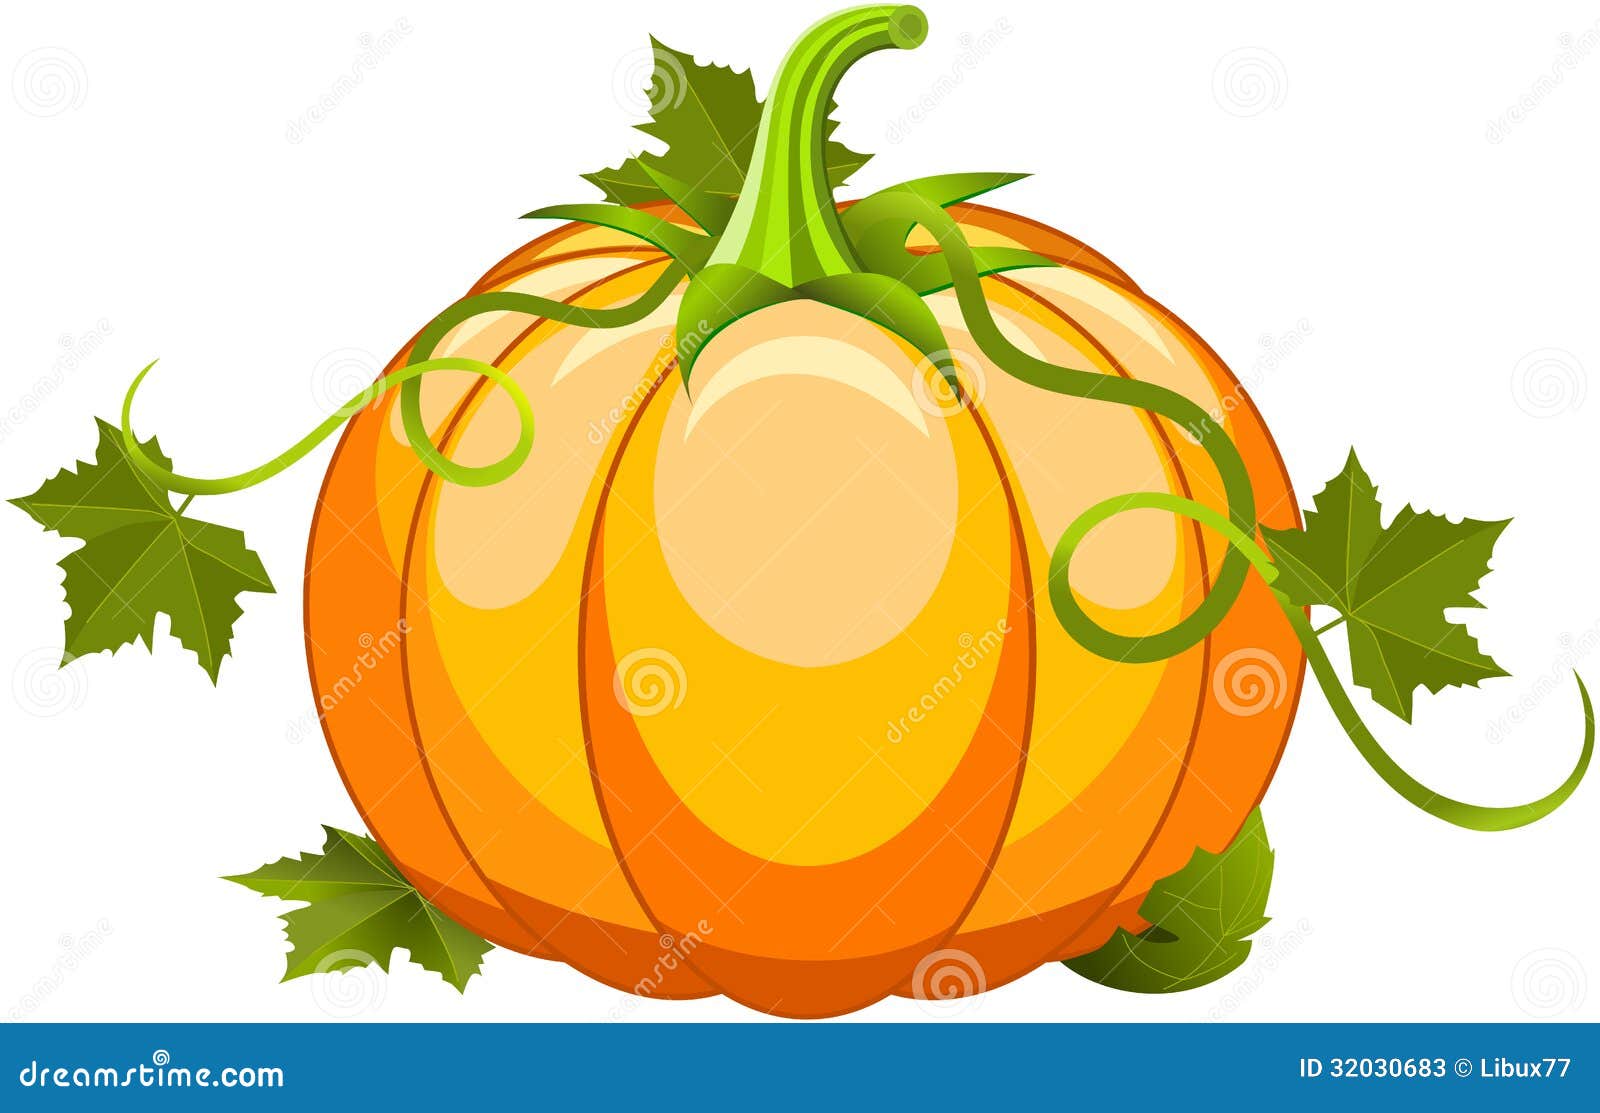 pumpkin vegetable fruit